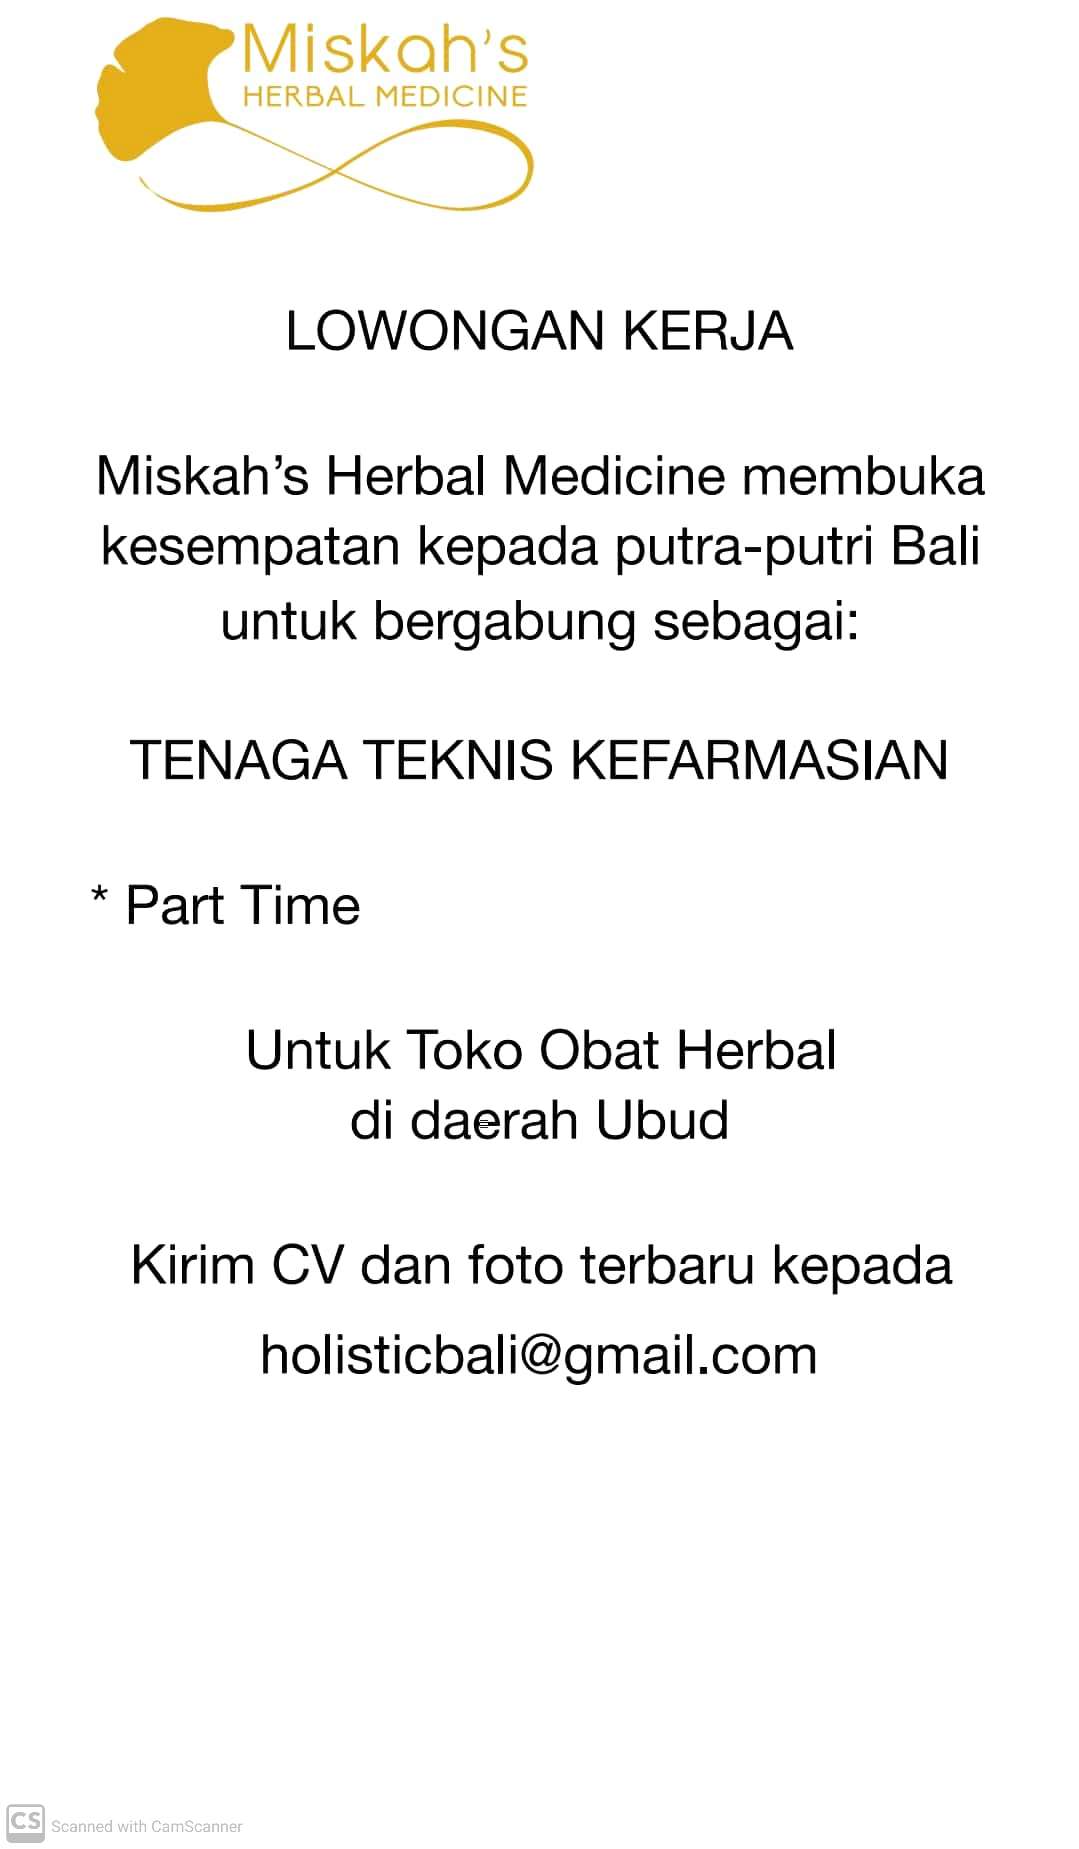 Miskah’s Herbal Medicine